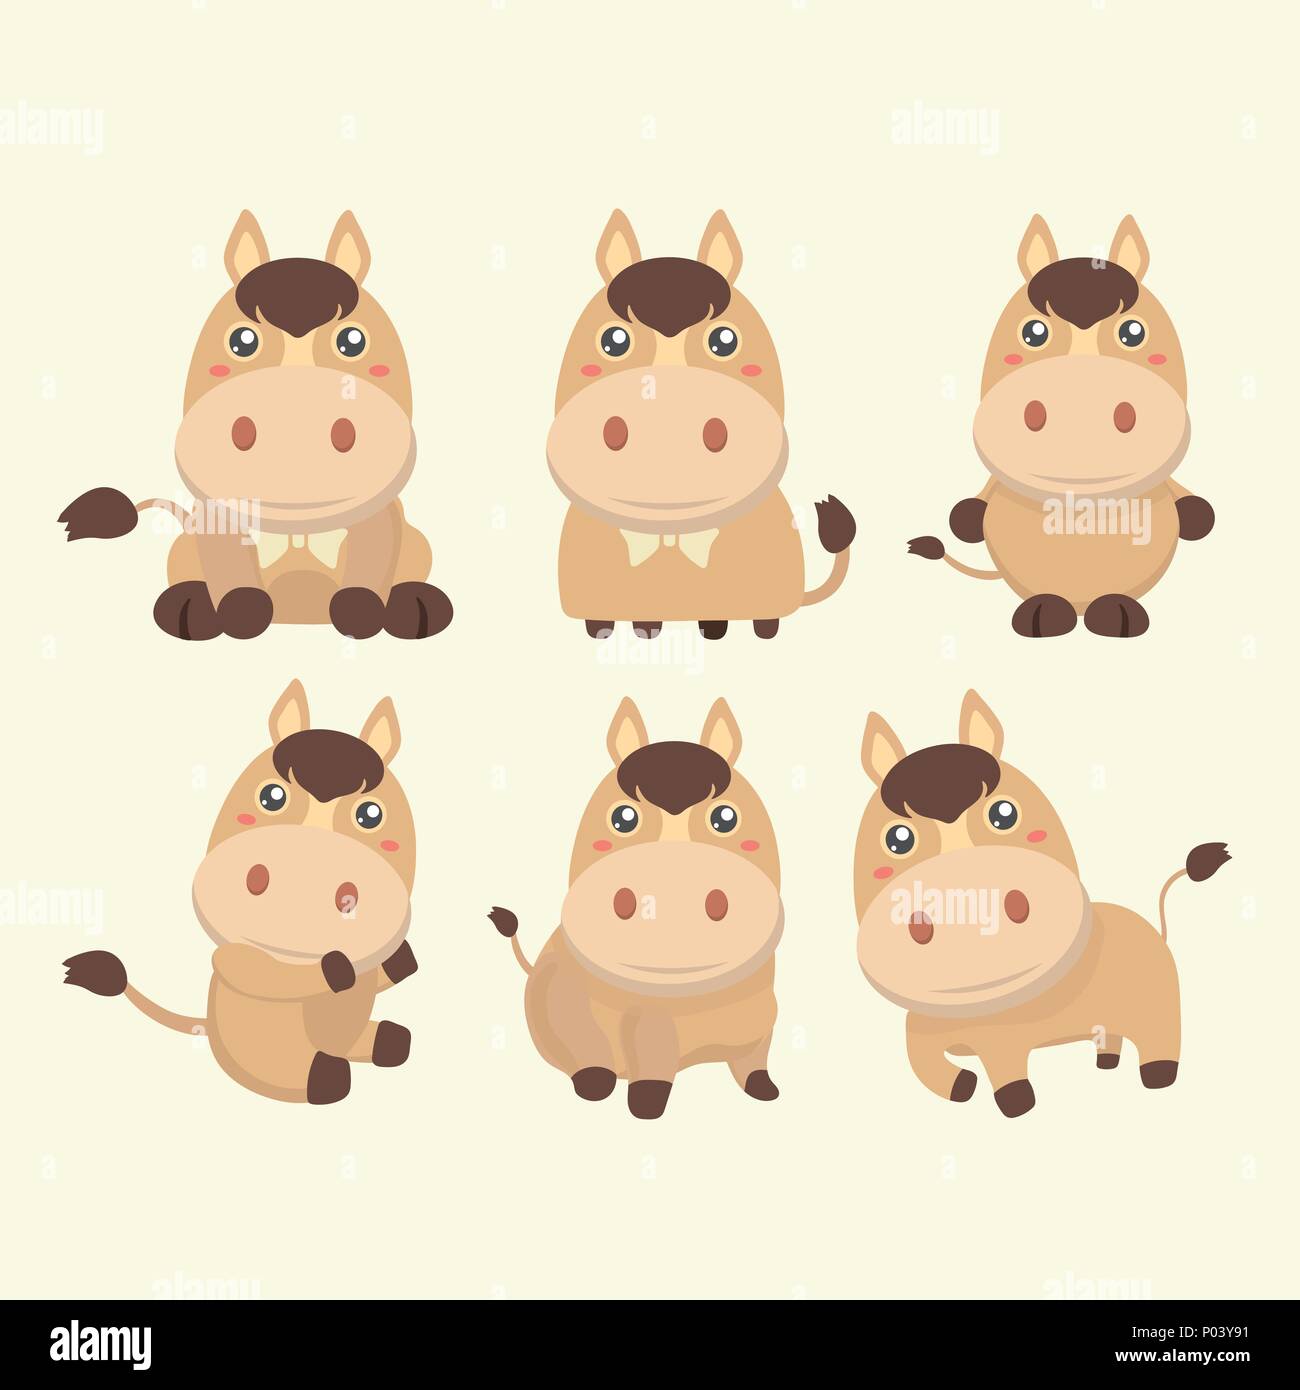 A set of cute brown cartoon horses. Stock Vector